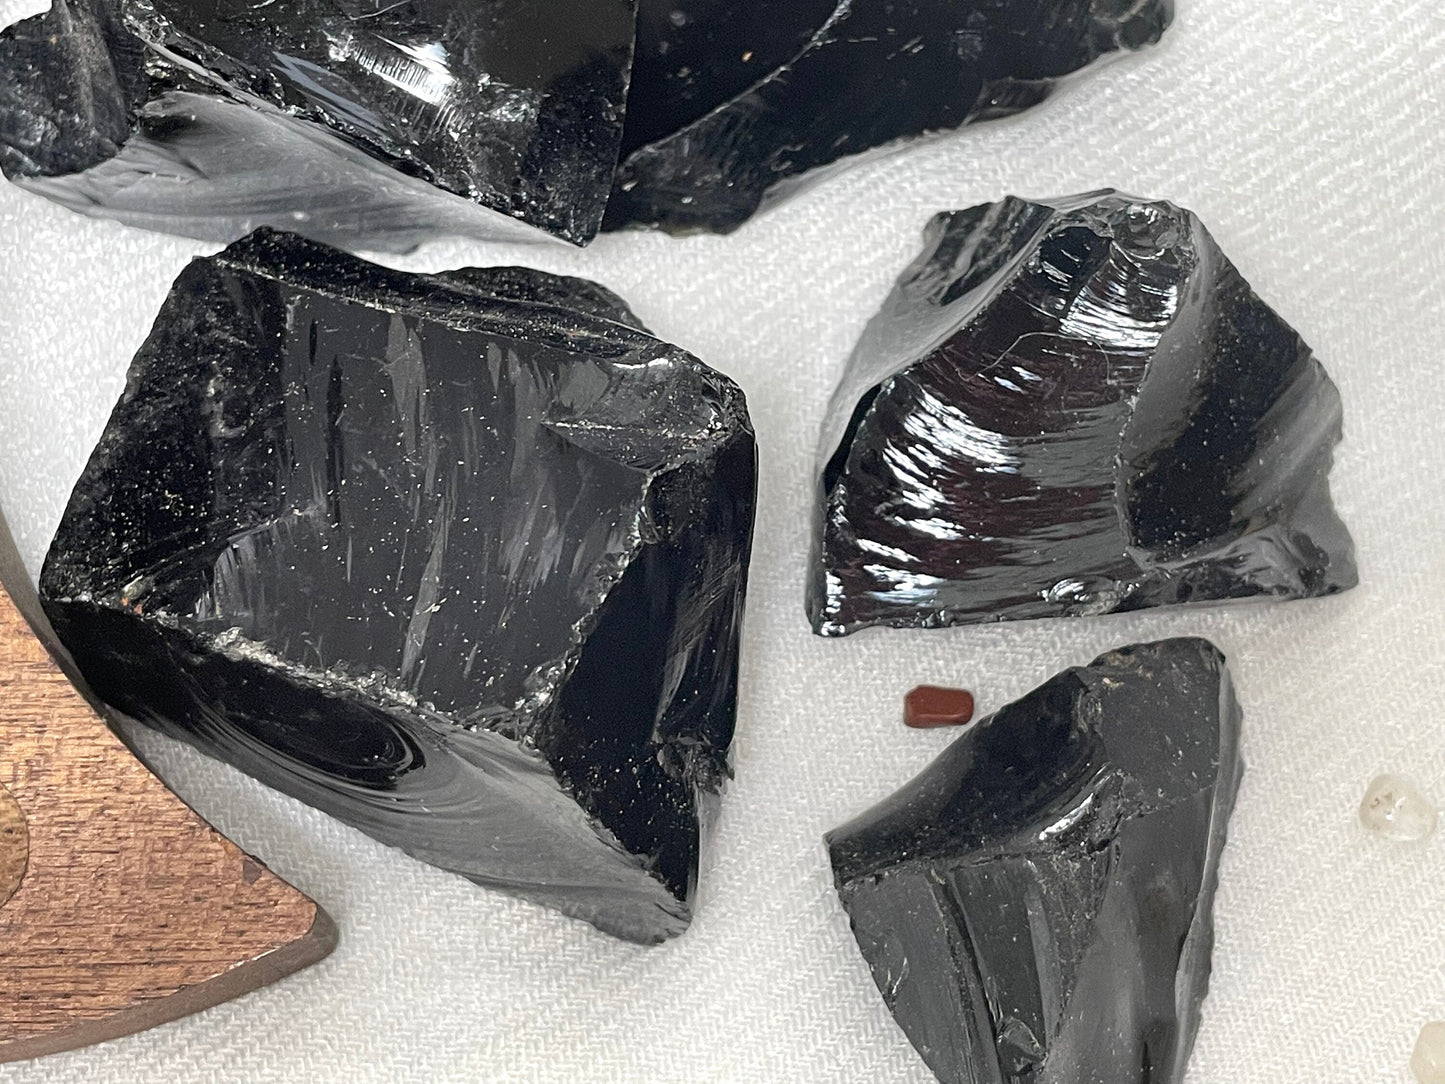 Black Obsidian, Rough